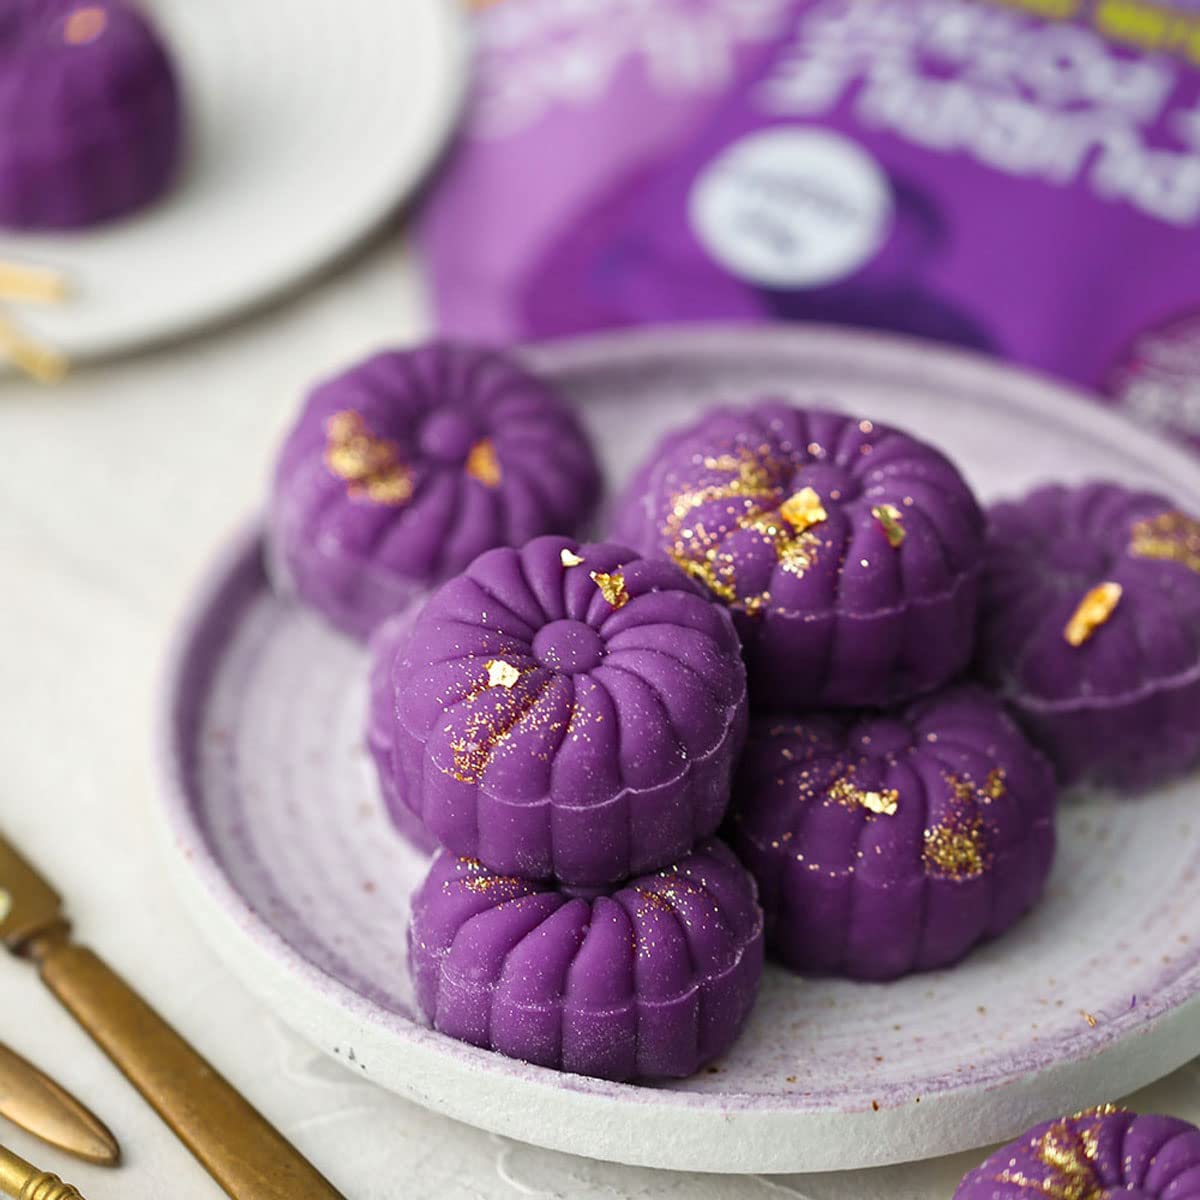 Suncore Foods Lilac Taro Yam Powder, Light Purple Food Coloring Powder, Gluten-Free, Non-GMO, 5oz (1 Pack) : Grocery & Gourmet Food